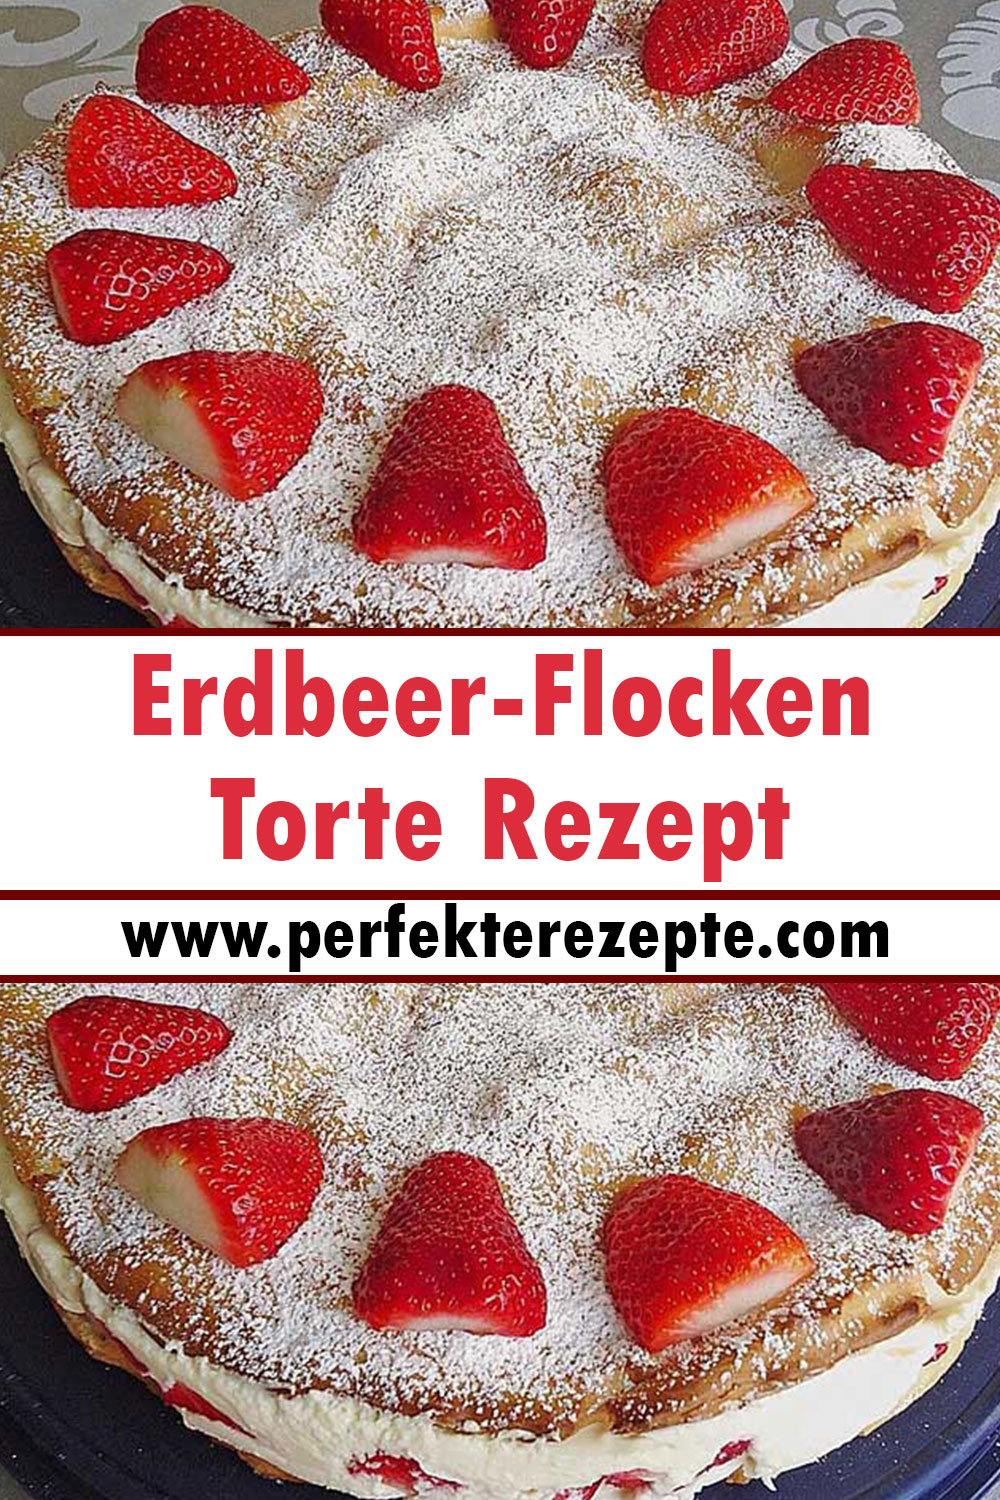 Erdbeer-Flocken-Torte Rezept